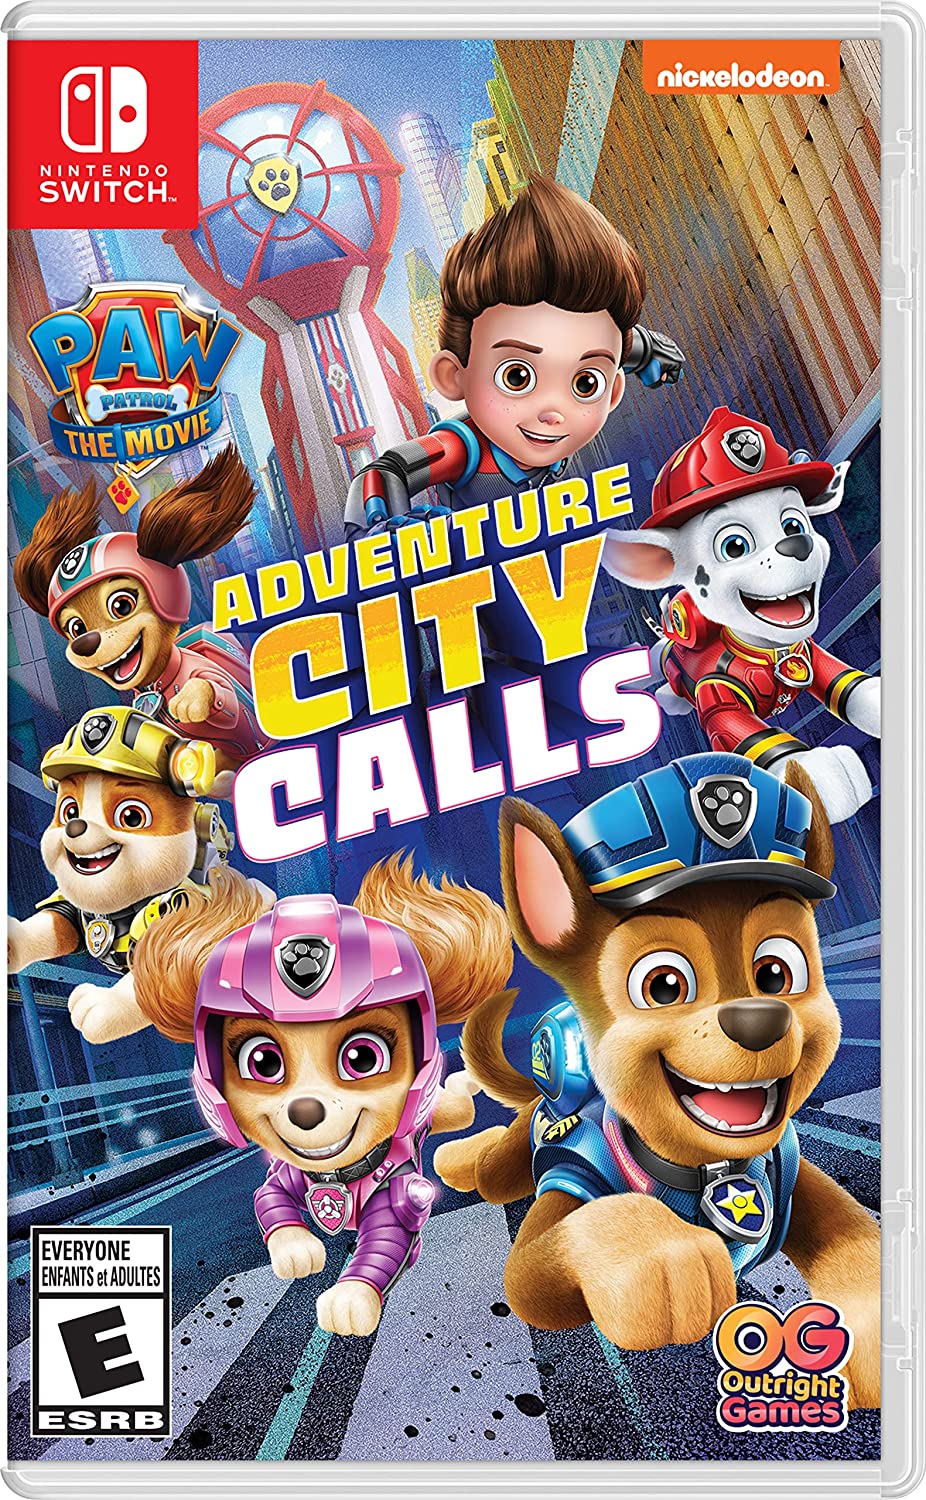 Paw Patrol: Adventure City Calls (Xbox One)